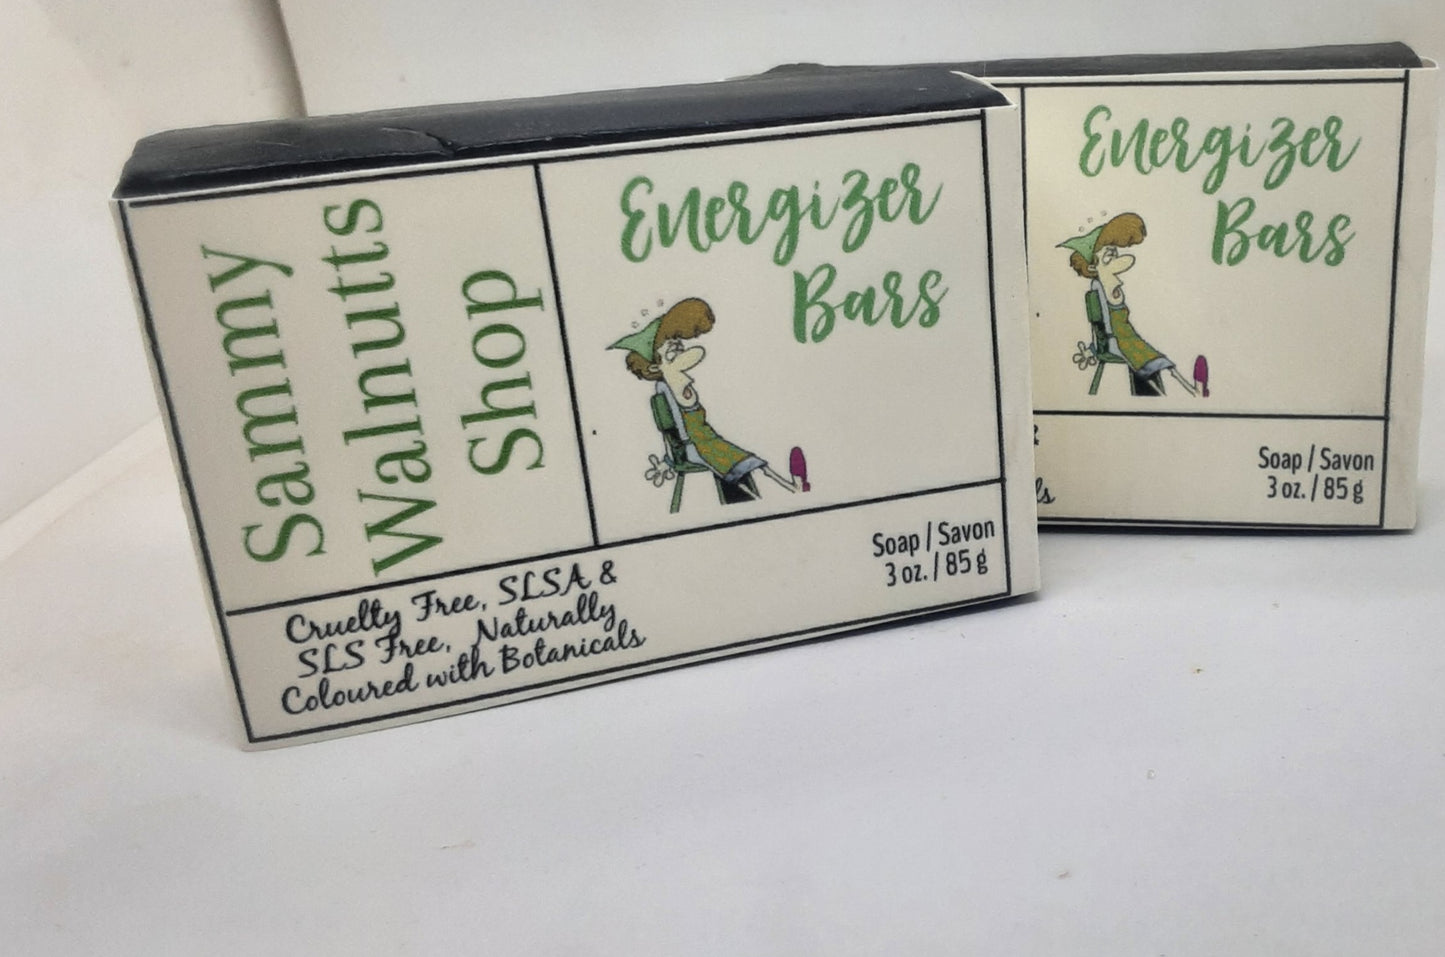 Eucalyptus & Peppermint "Energizer"  Bar Soap - Vegan